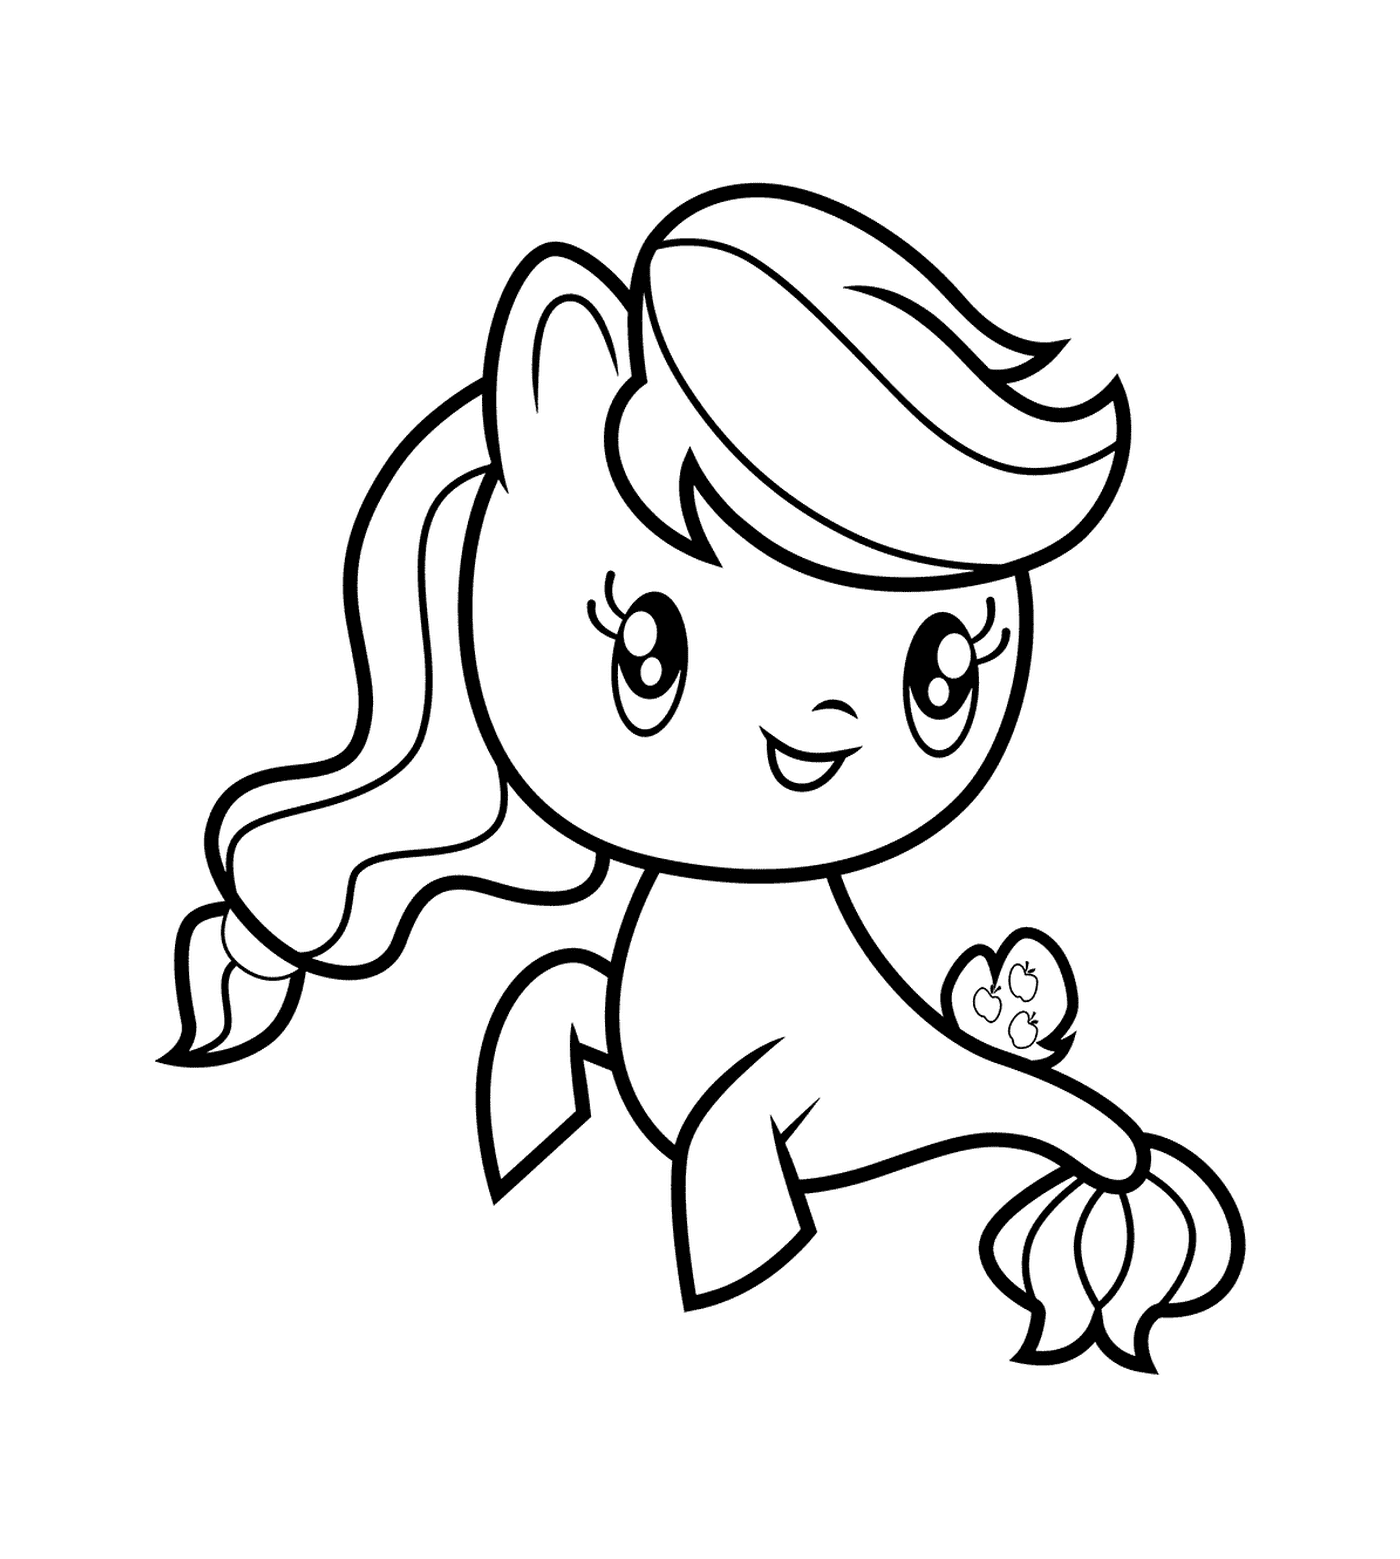  Applejack Pony of Sea aus der Kollektion Cutie Mark 